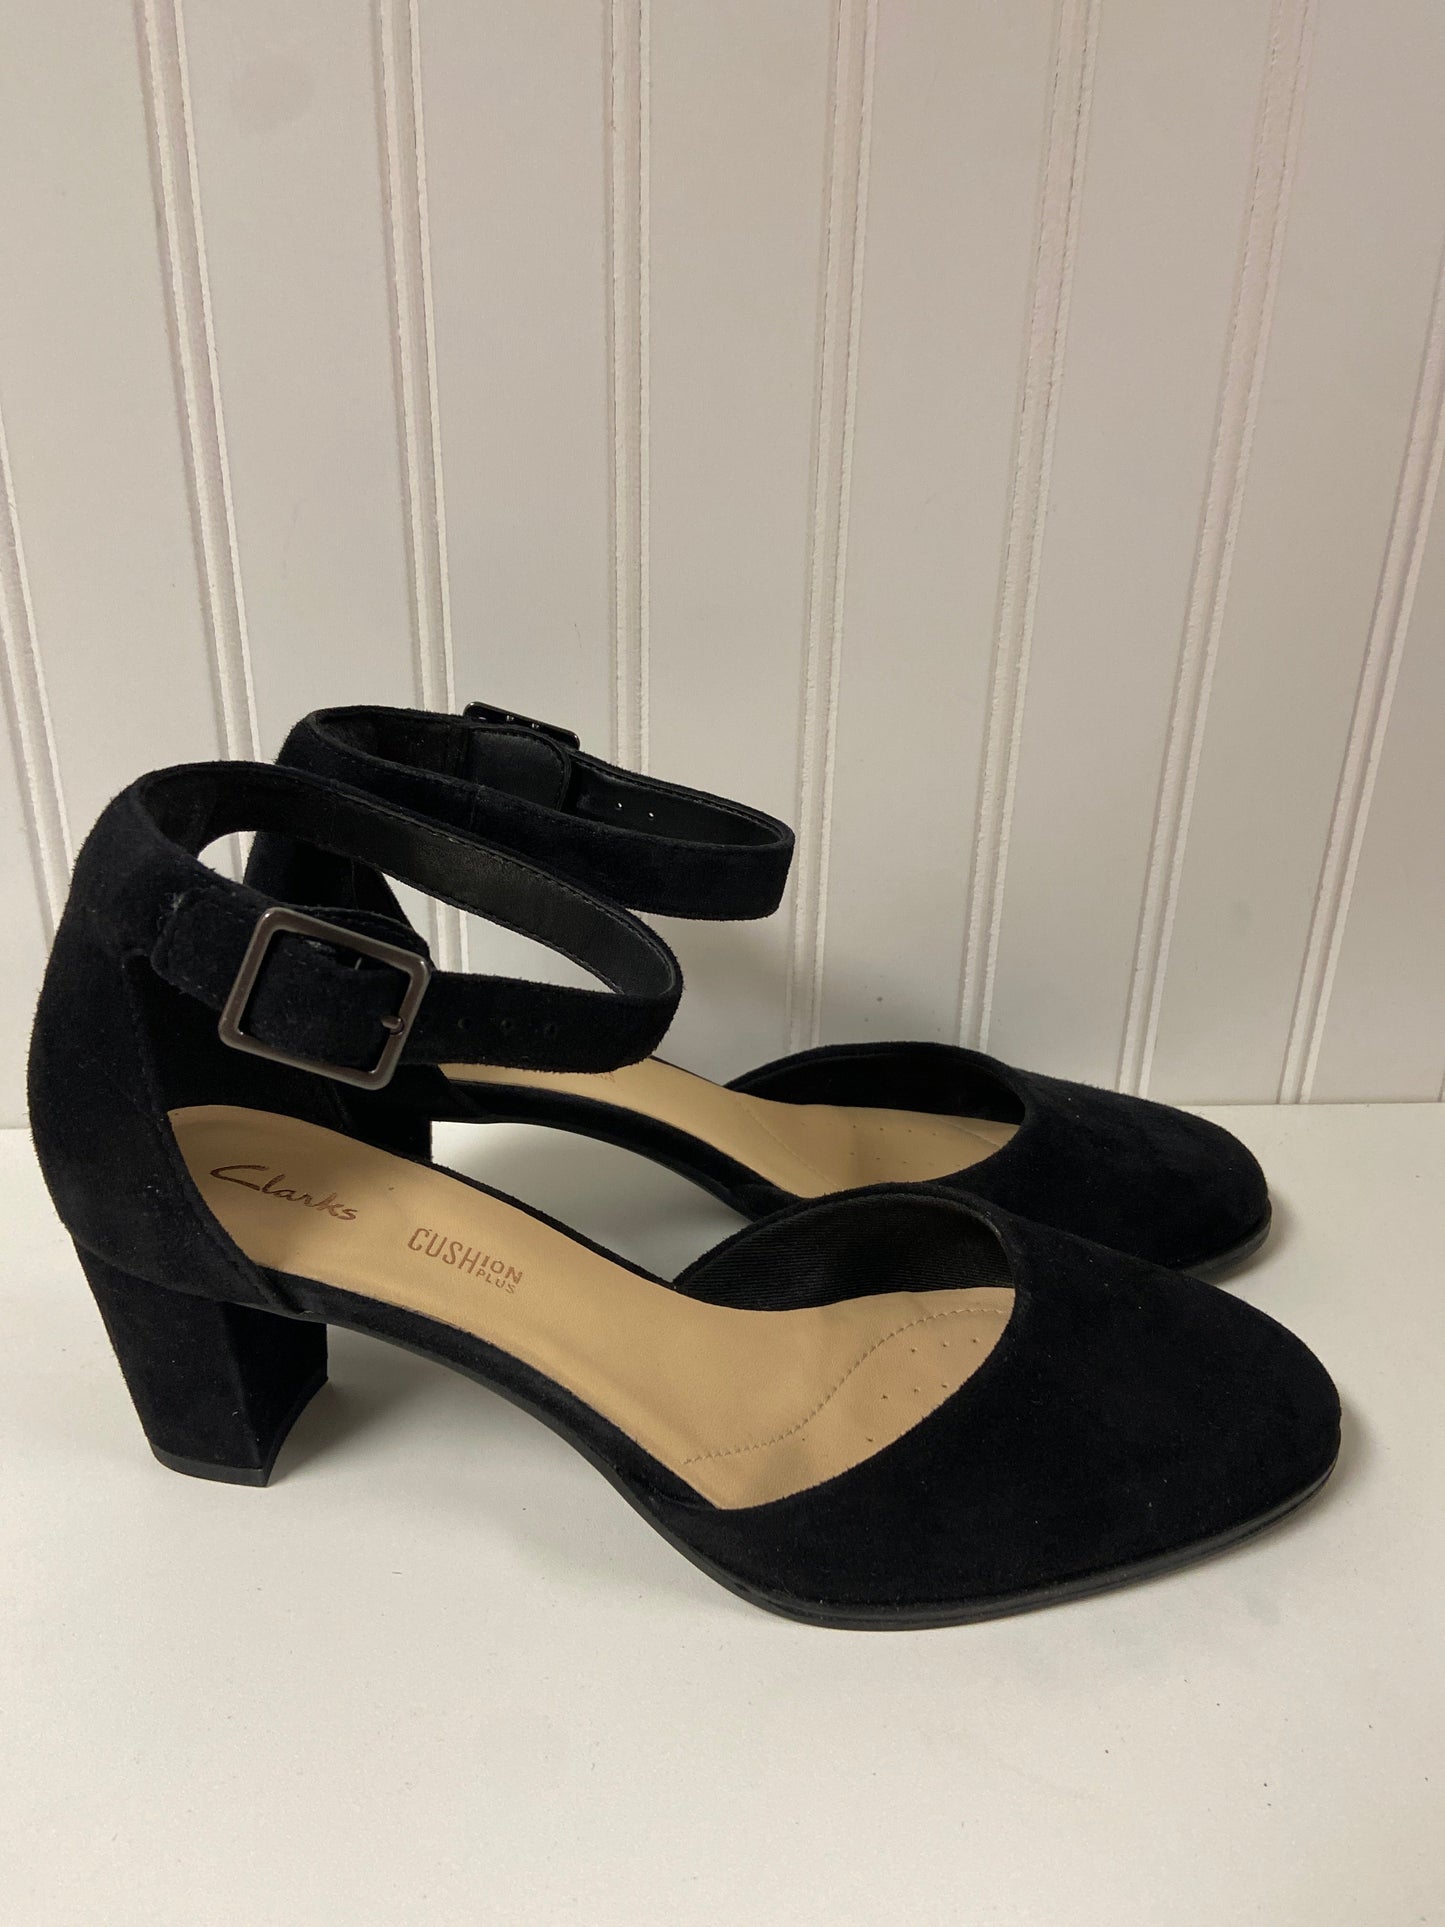 Black Shoes Heels Block Clarks, Size 8